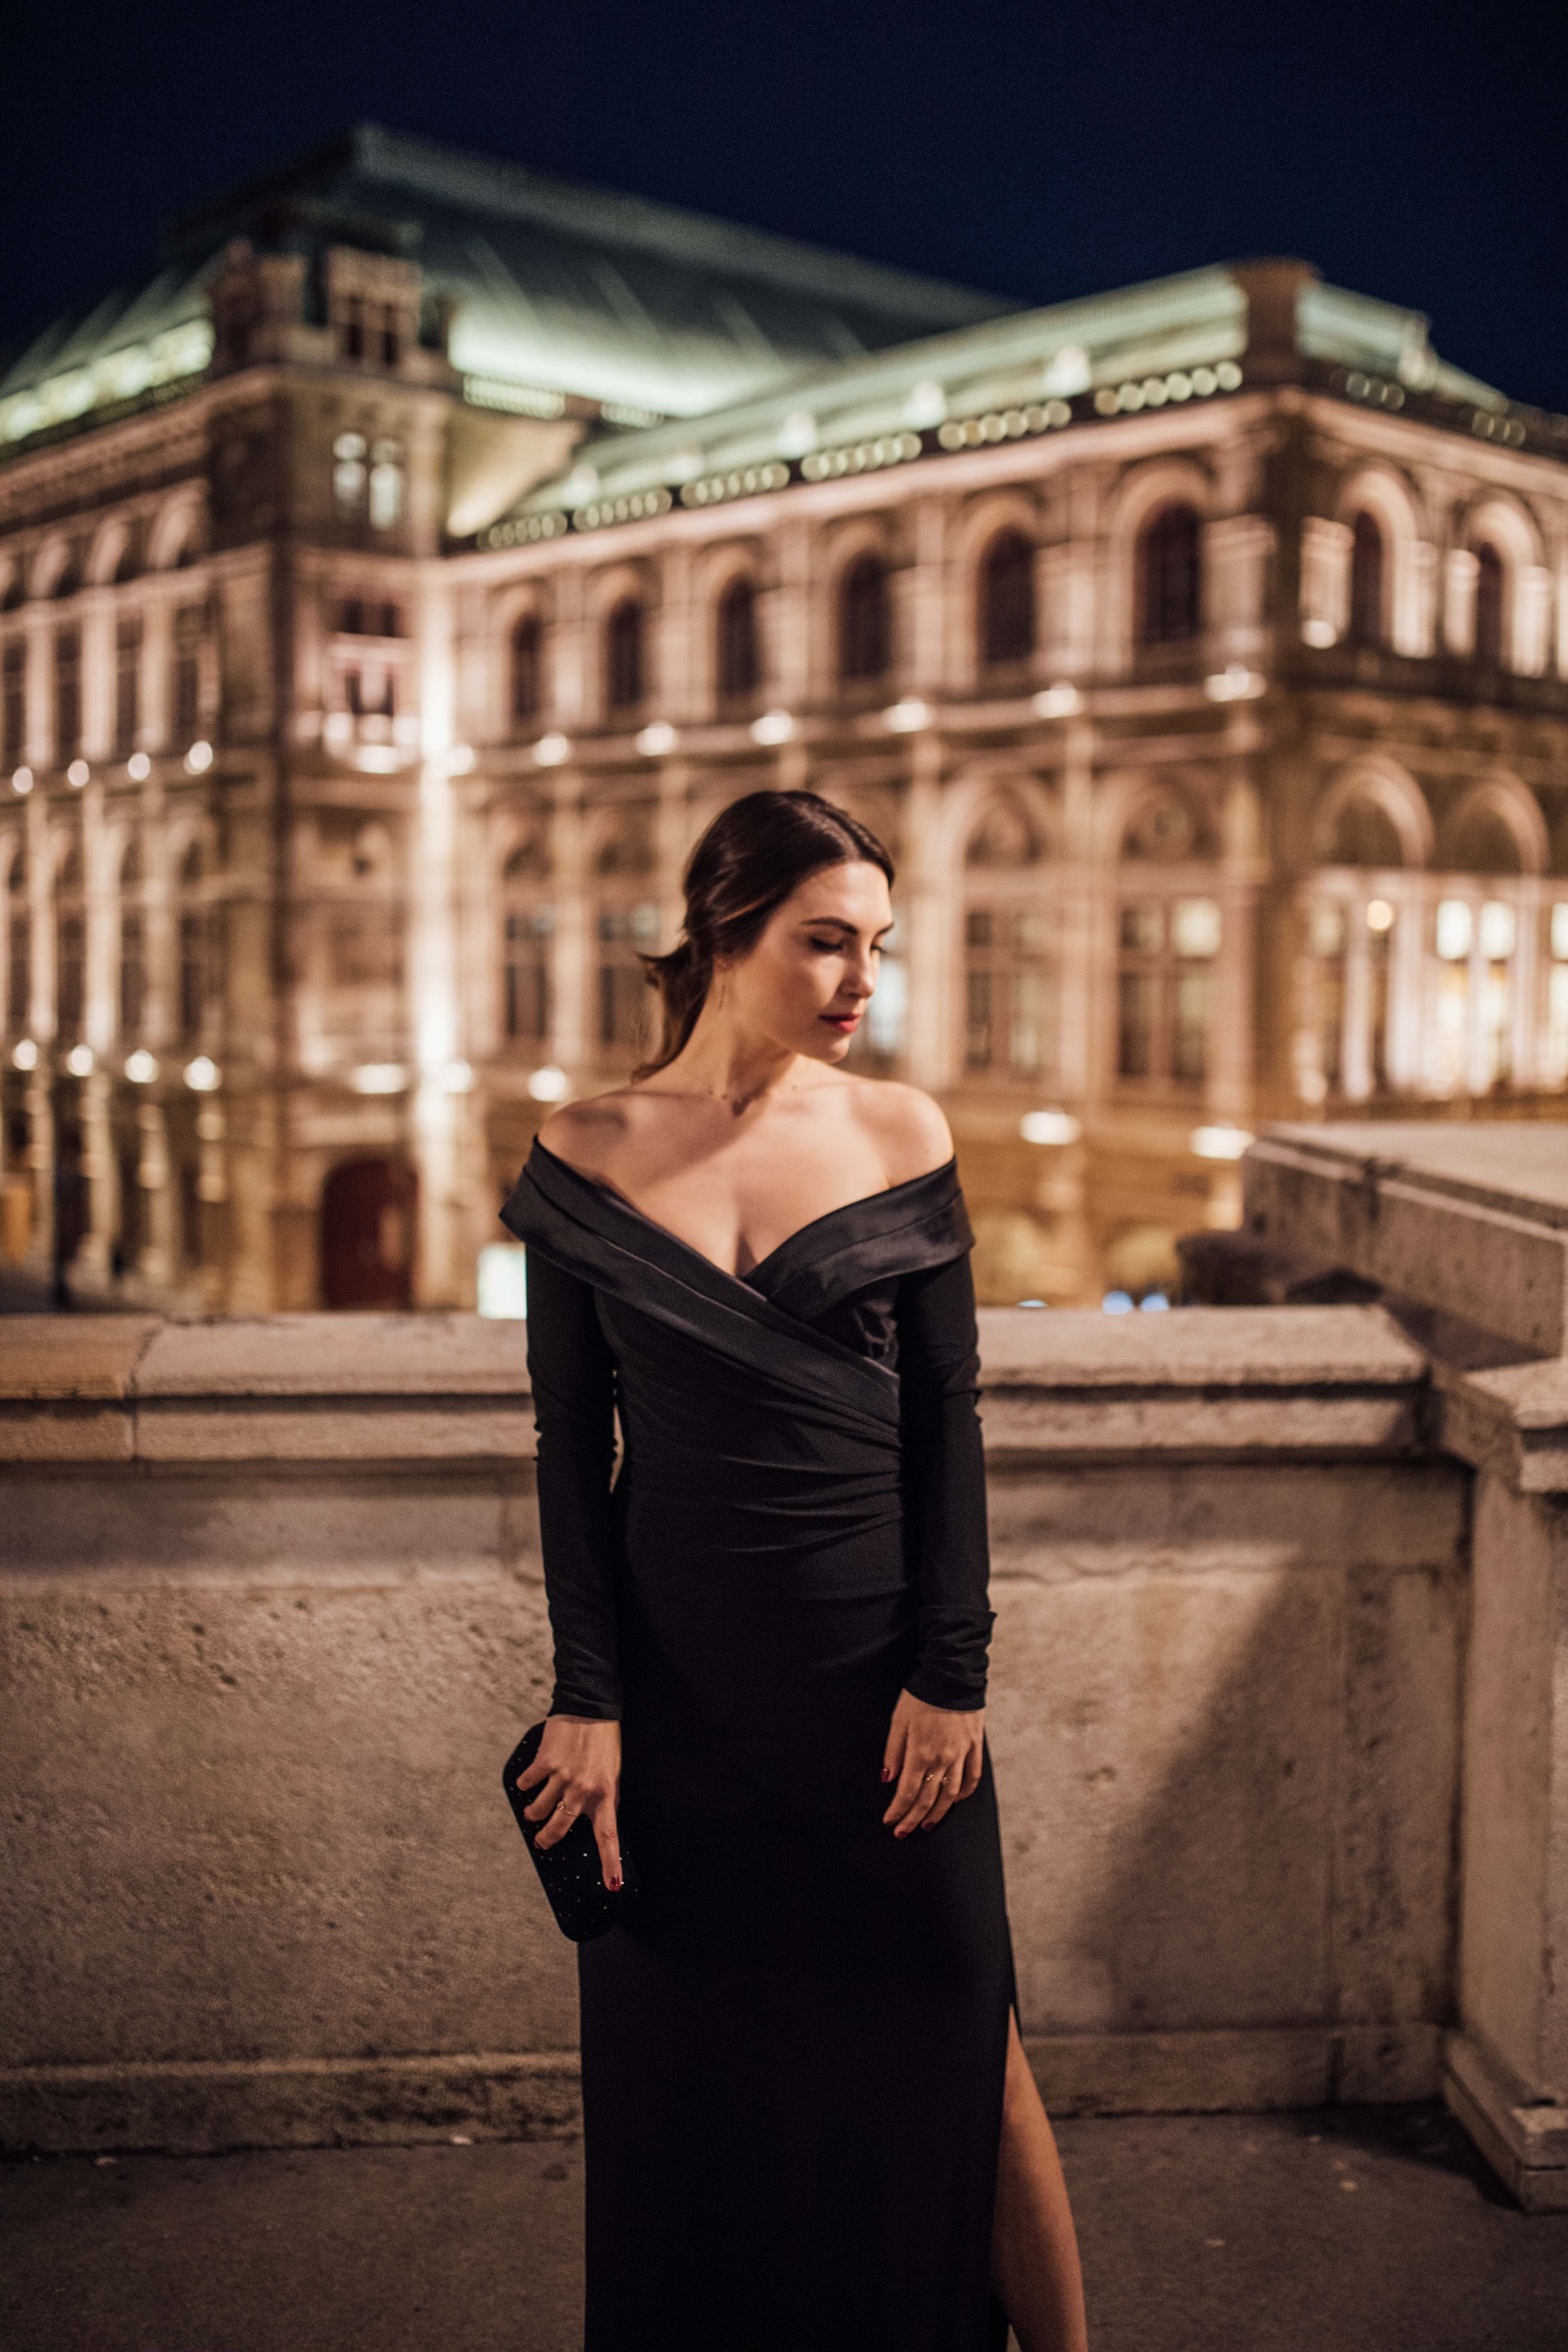 Vienna Opera Ball 2017: A Fairytale Moment | You rock my life